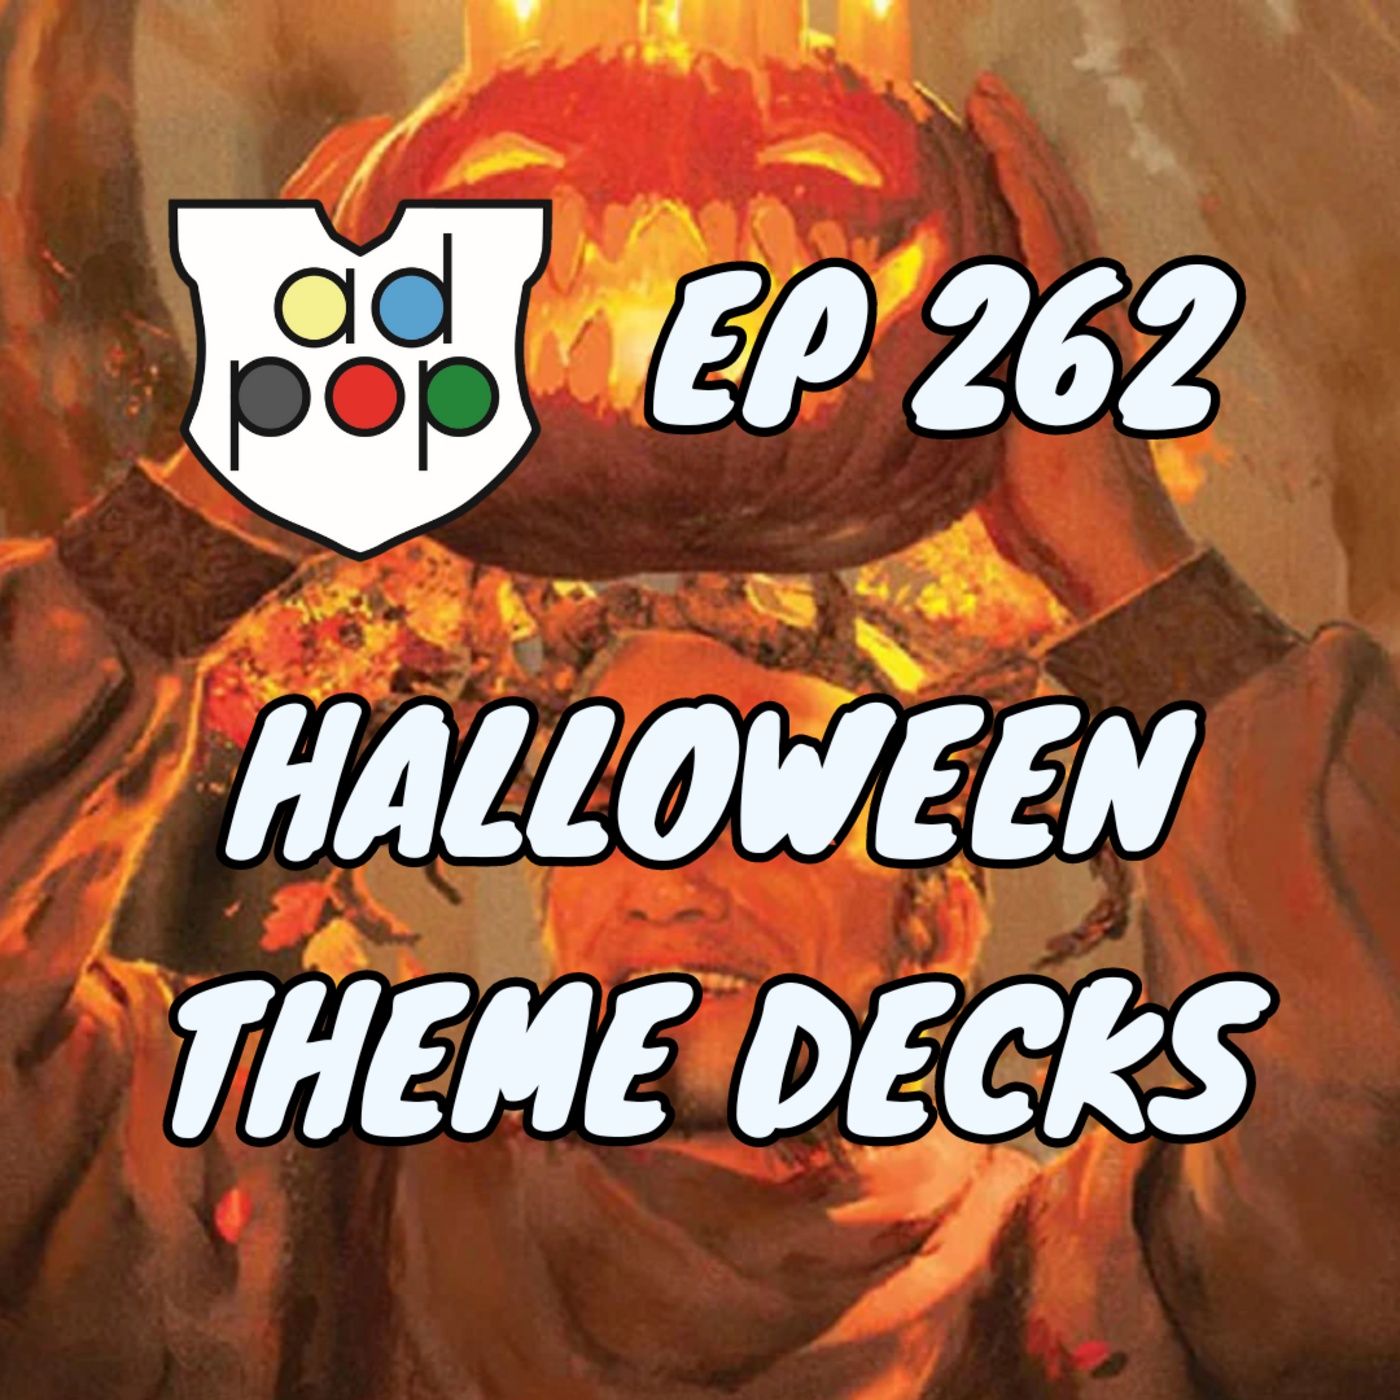 Episode 262: Commander ad Populum, Ep 262 - Halloween Theme-Deck Ideas